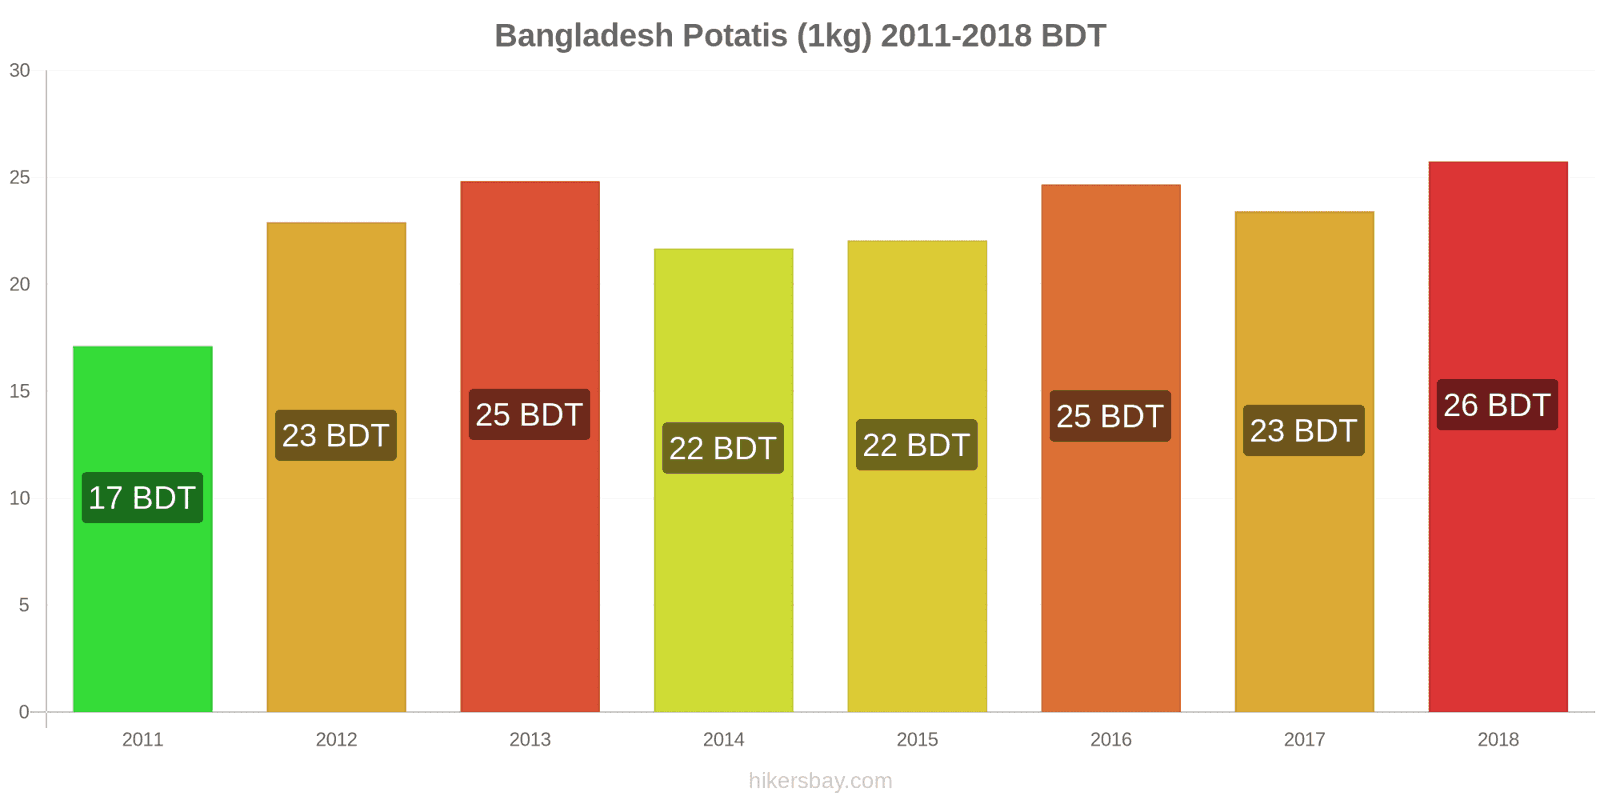 Bangladesh prisändringar Potatis (1kg) hikersbay.com